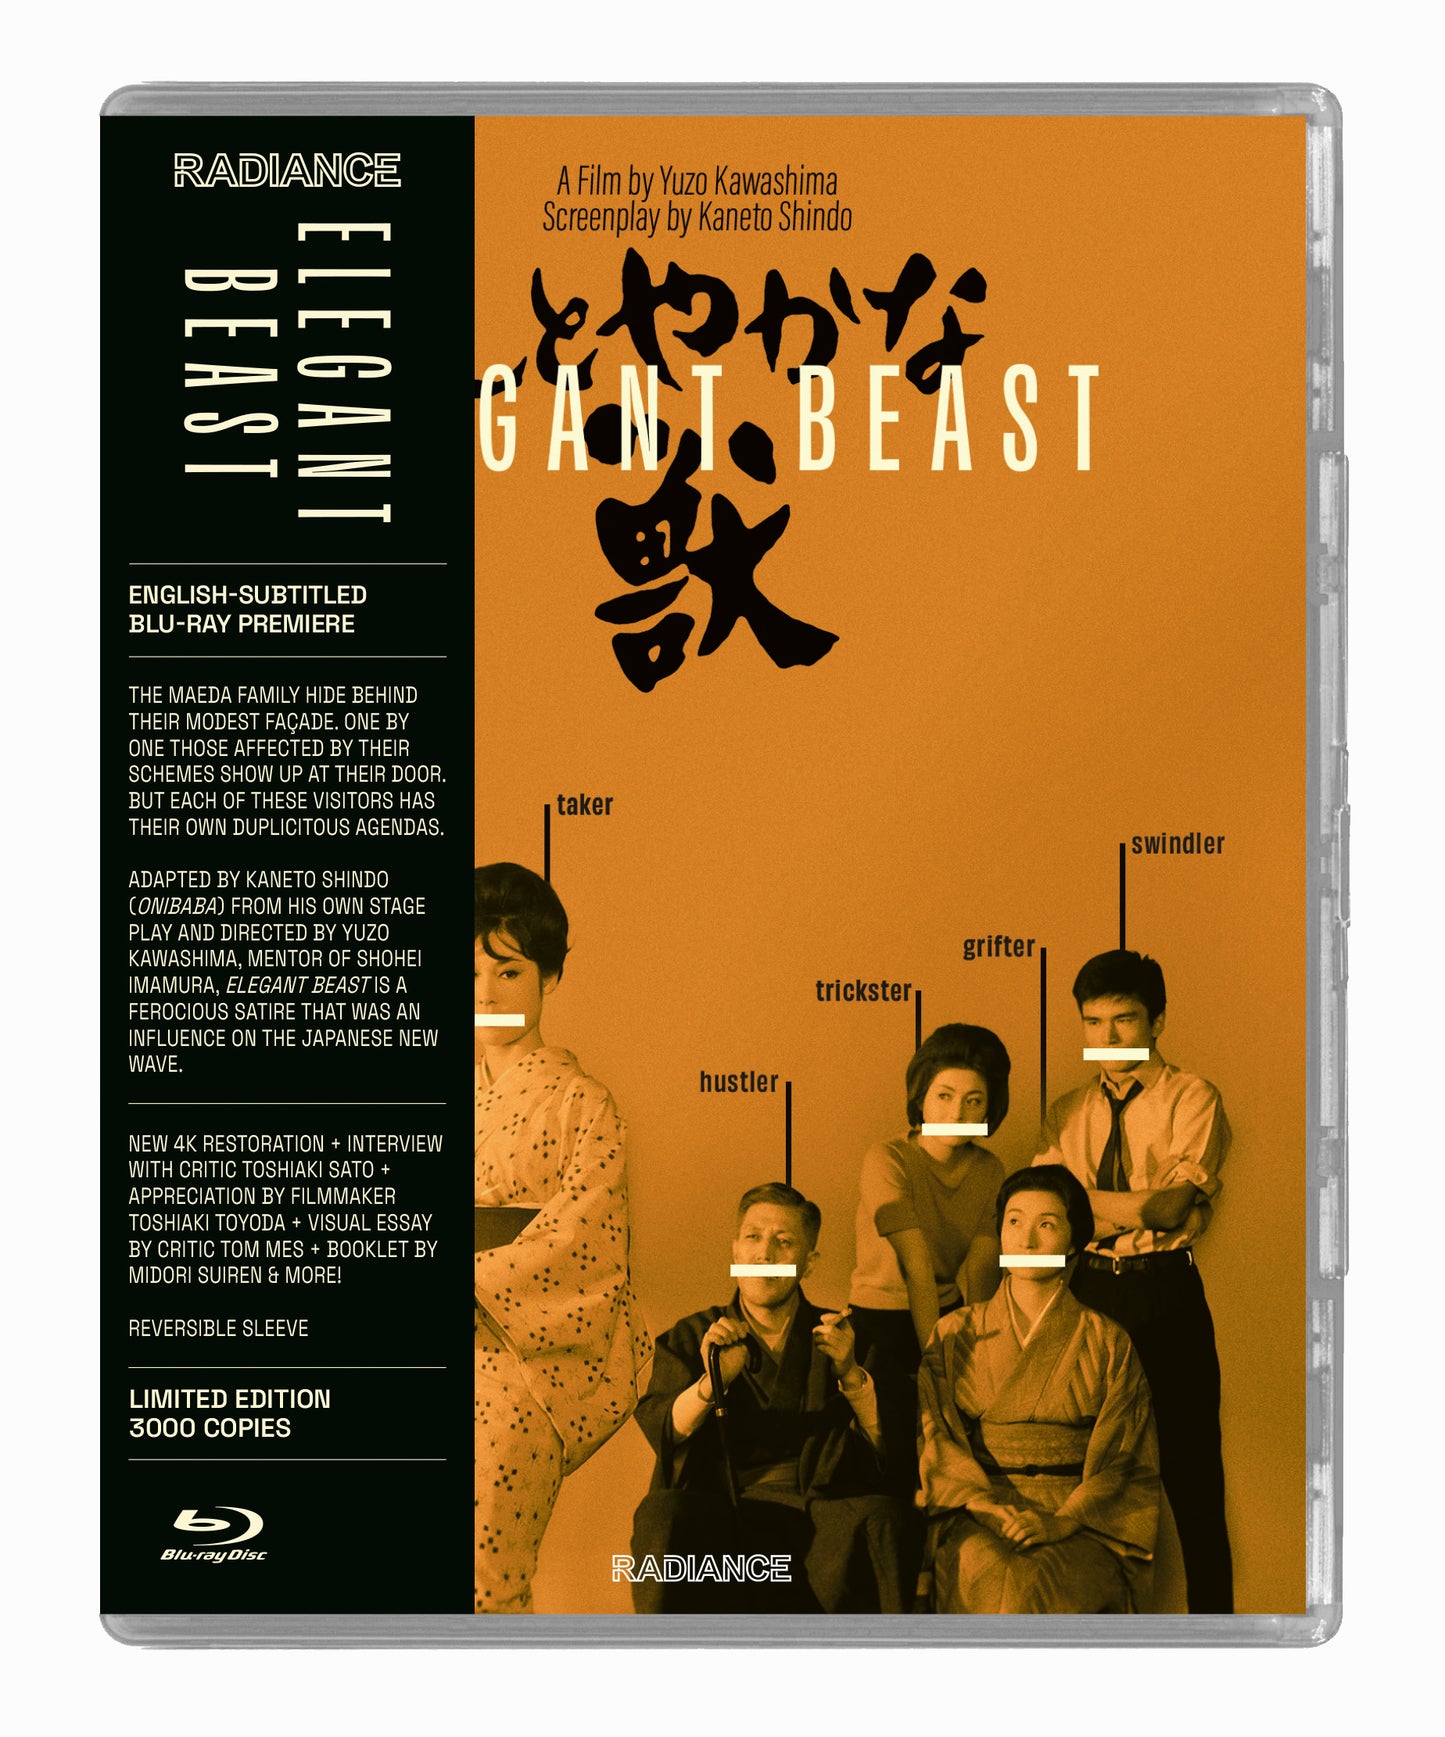 Elegant Beast Limited Edition Blu-ray (Radiance U.S.)